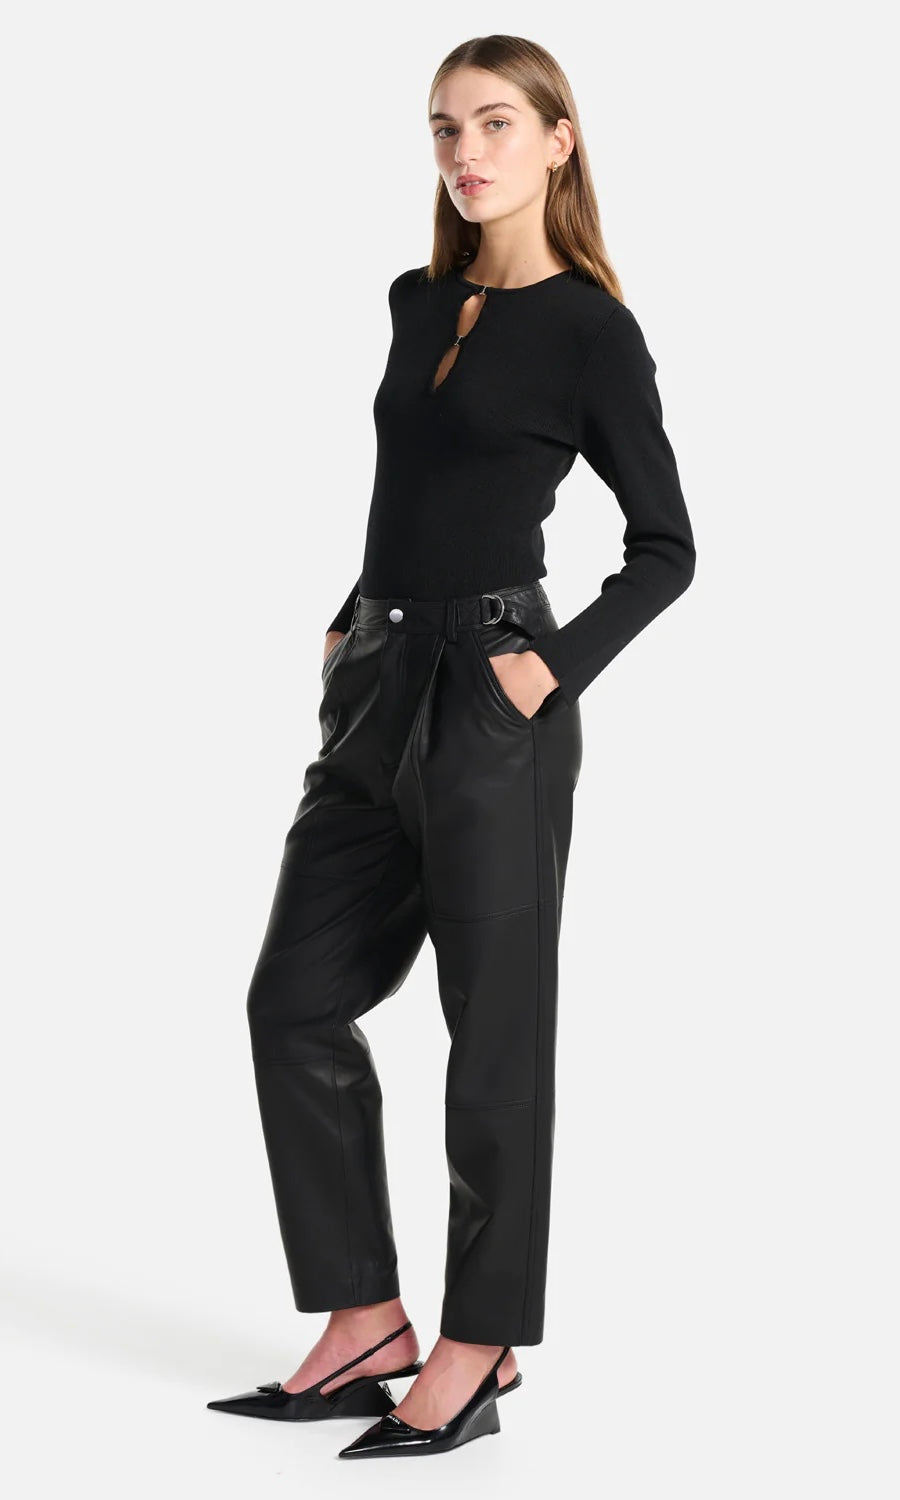 Ena Pelly Hazel Buckled Leather Pant In Black